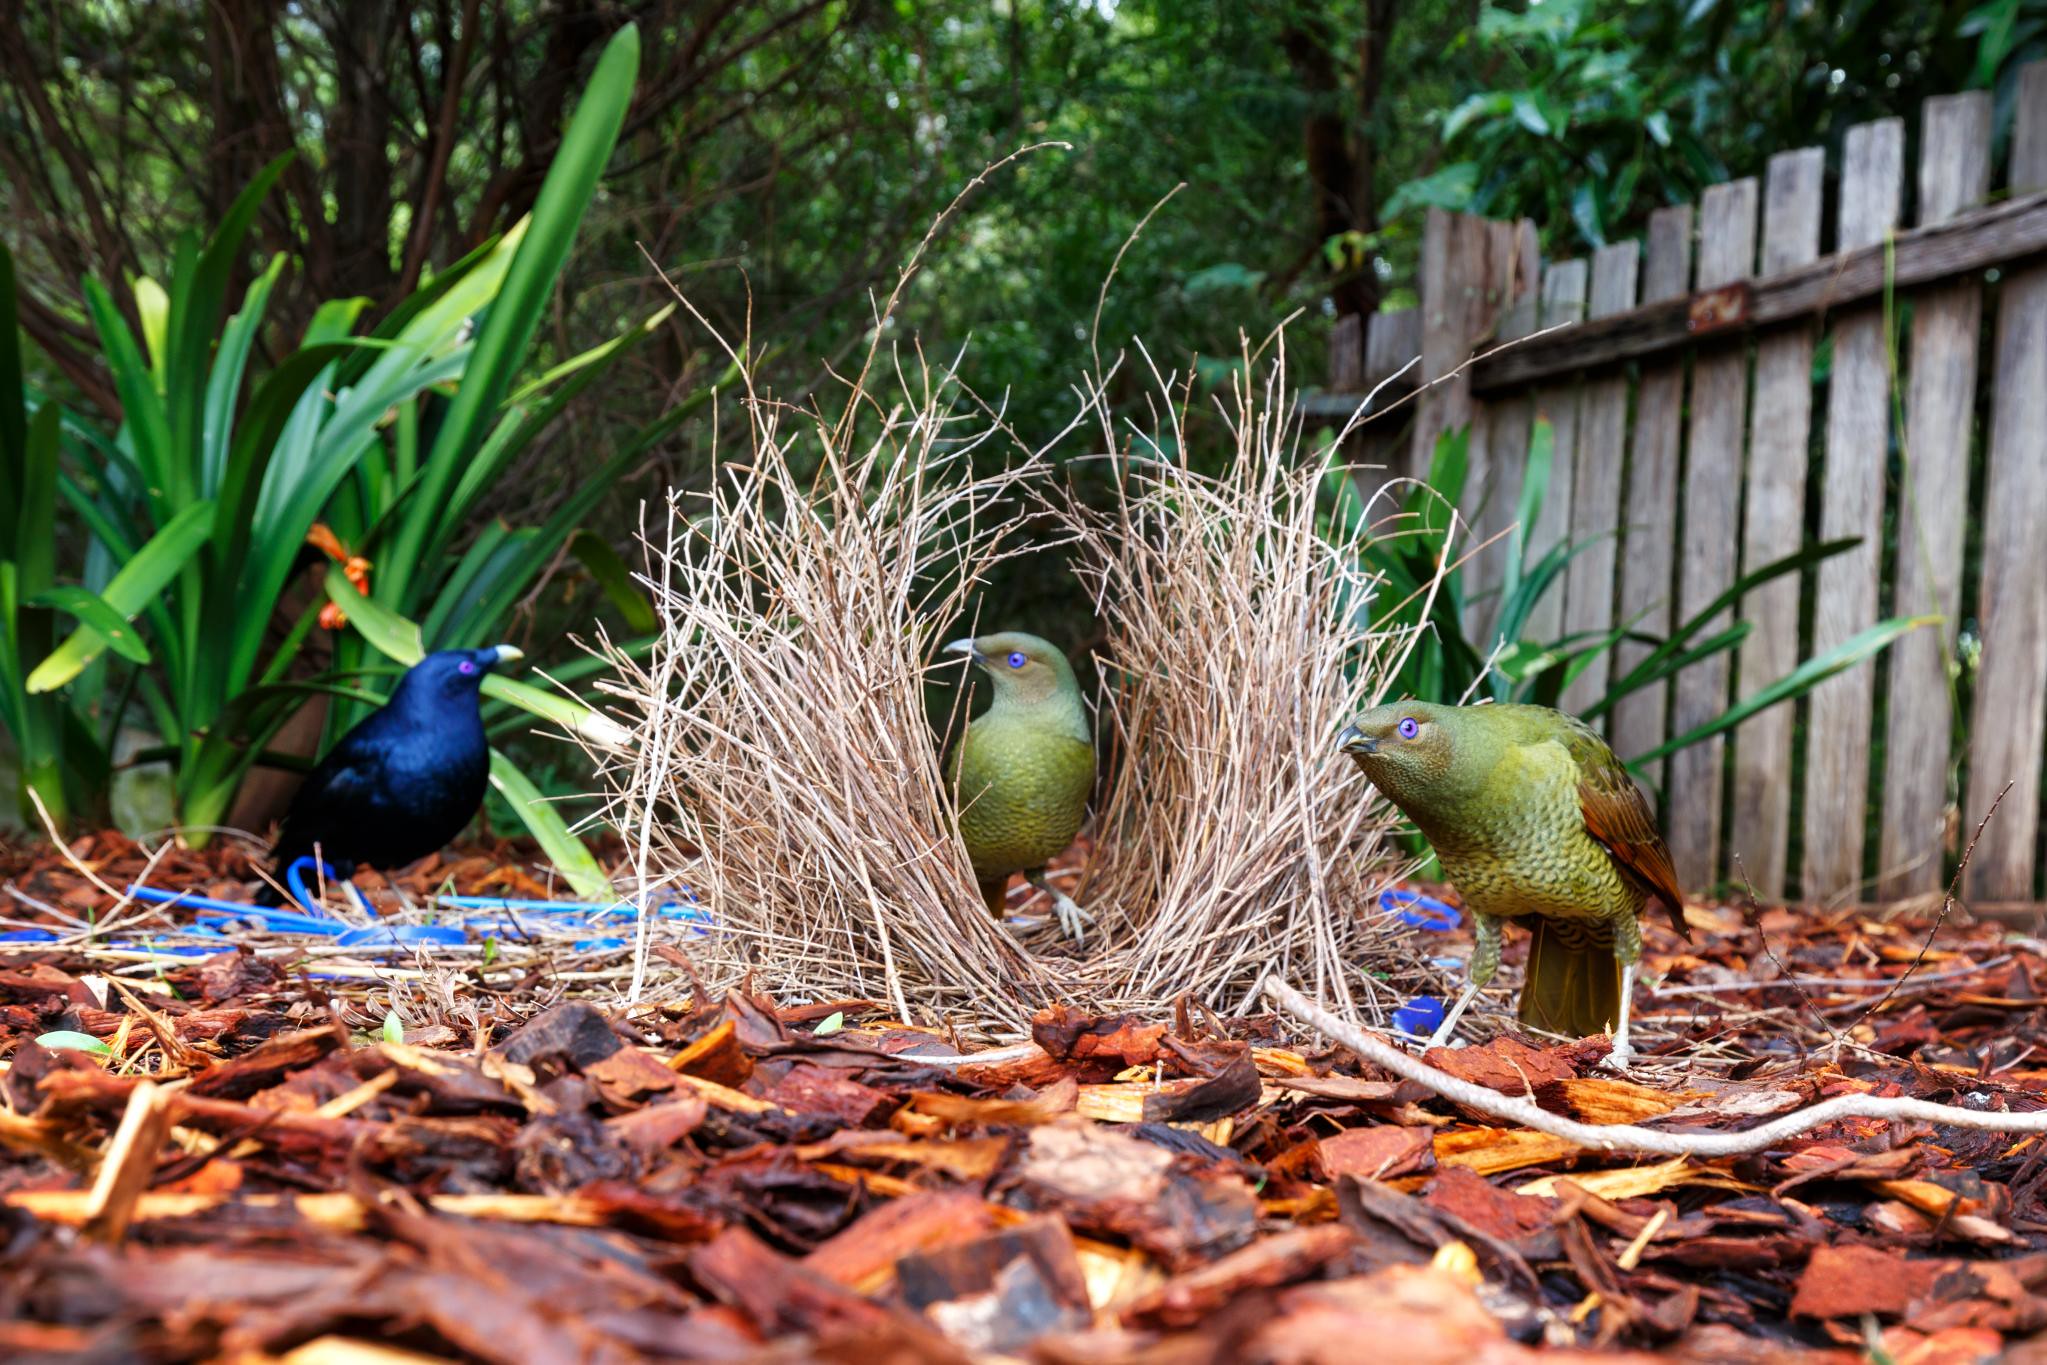 Bowerbirds: Meet the Bird World's Kleptomaniac Love Architects